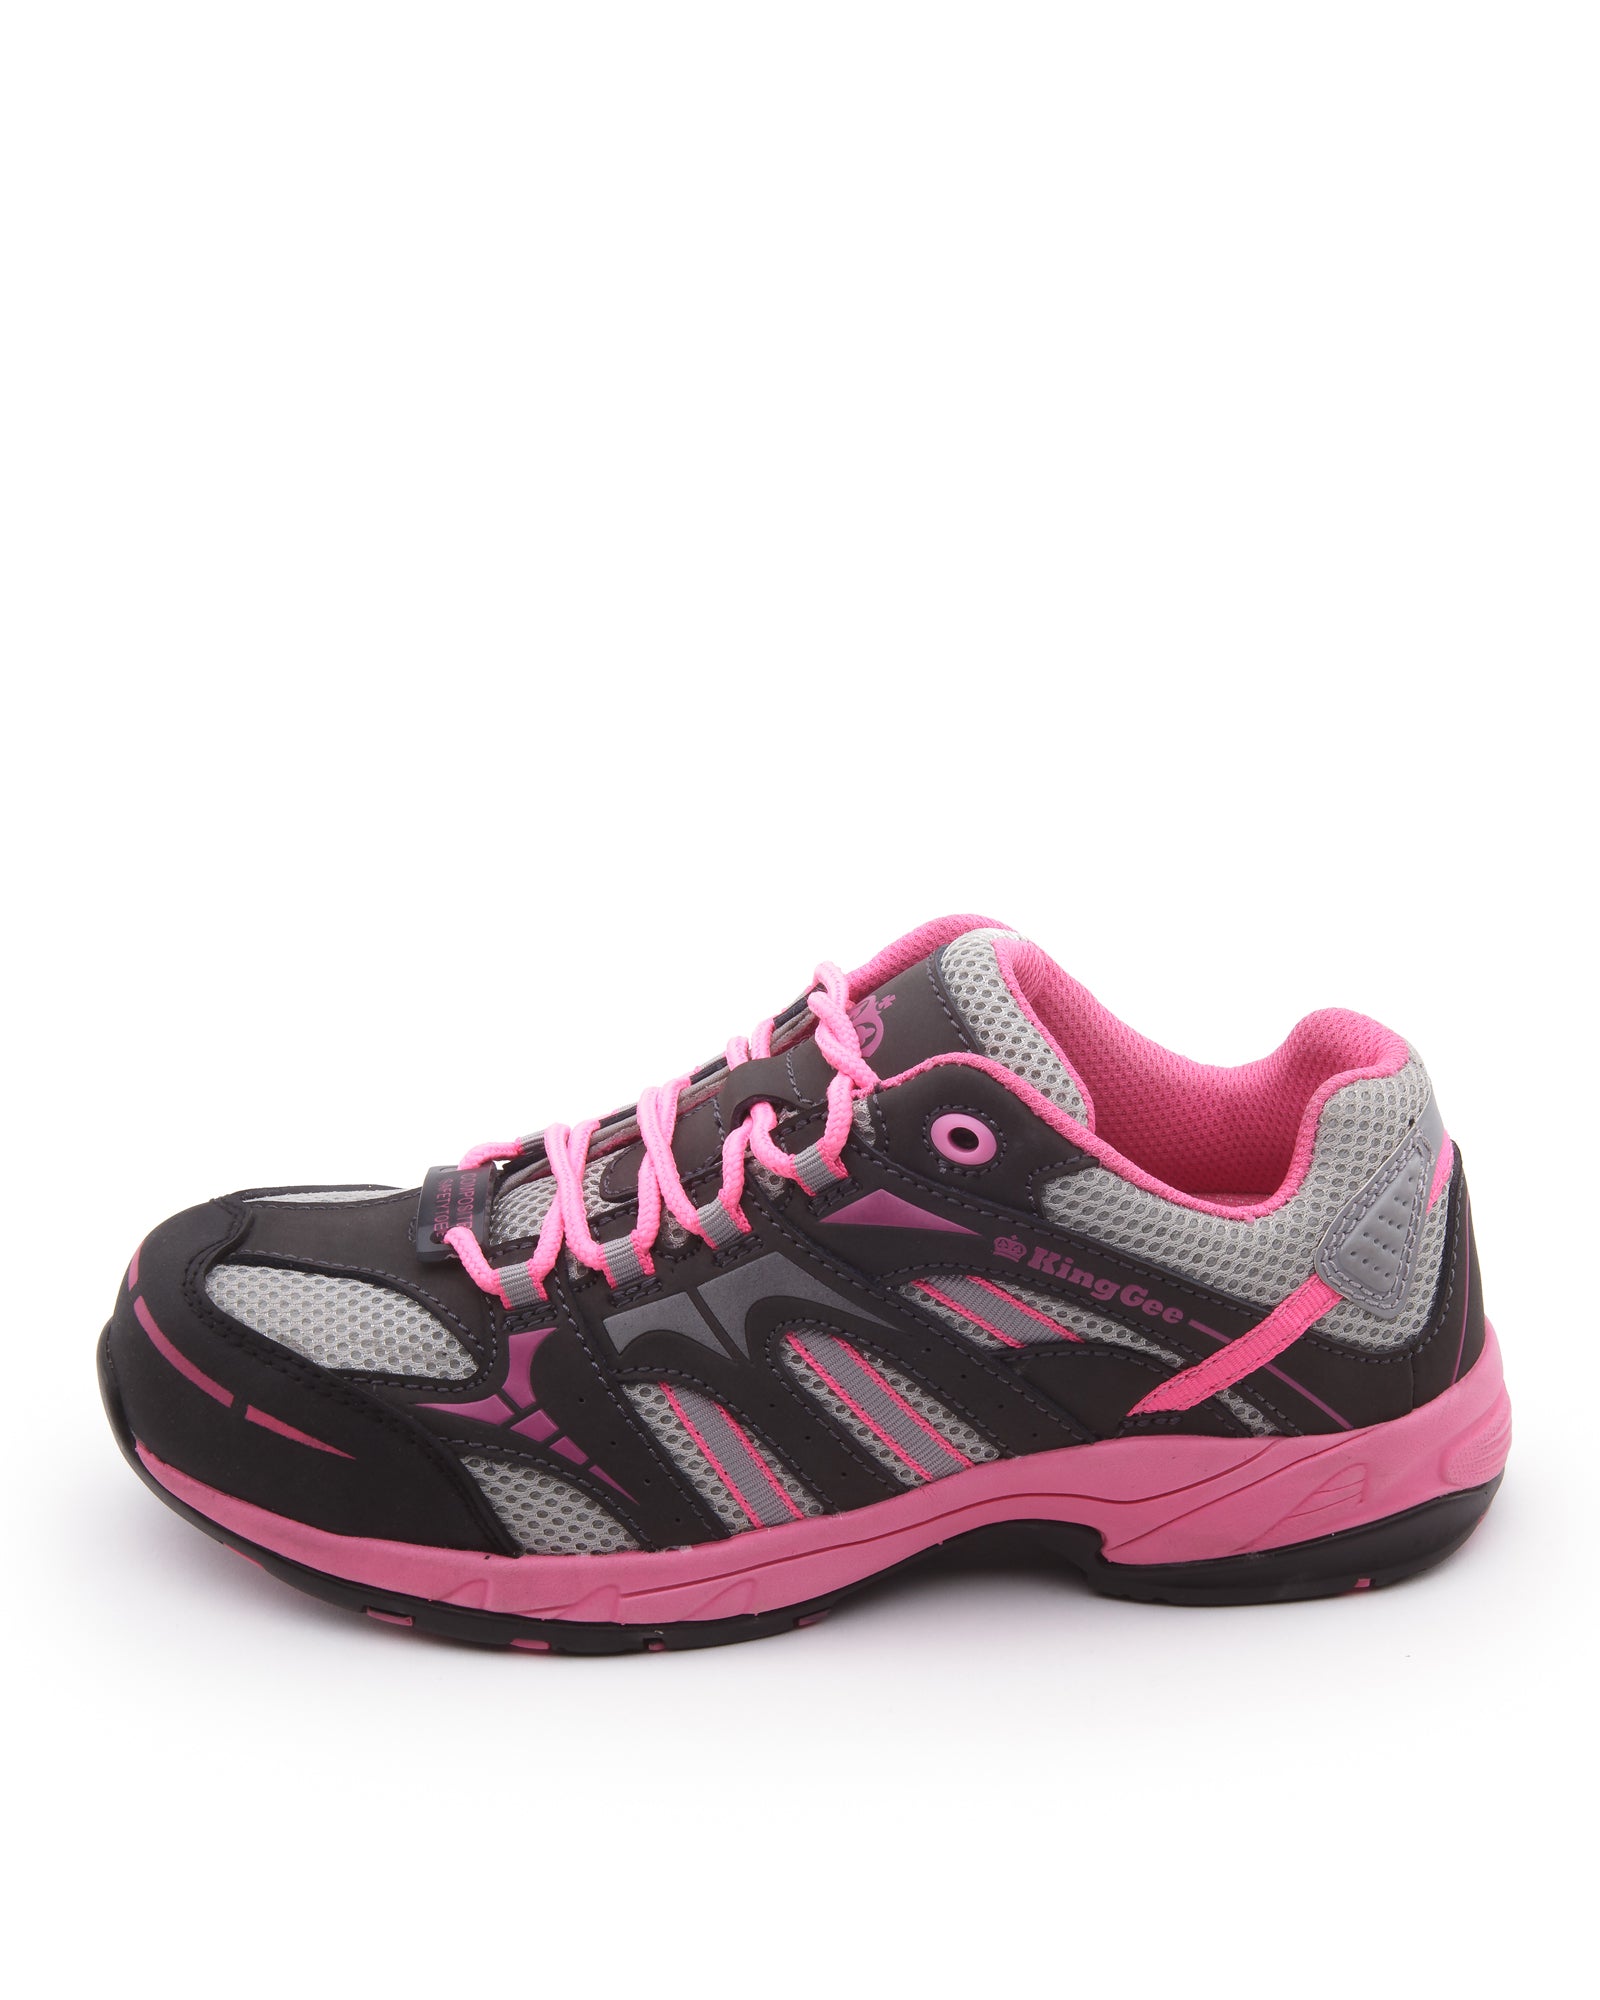 King Gee Comptec Womens Safety Jogger Black Pink - Pink/Black | Buy Online